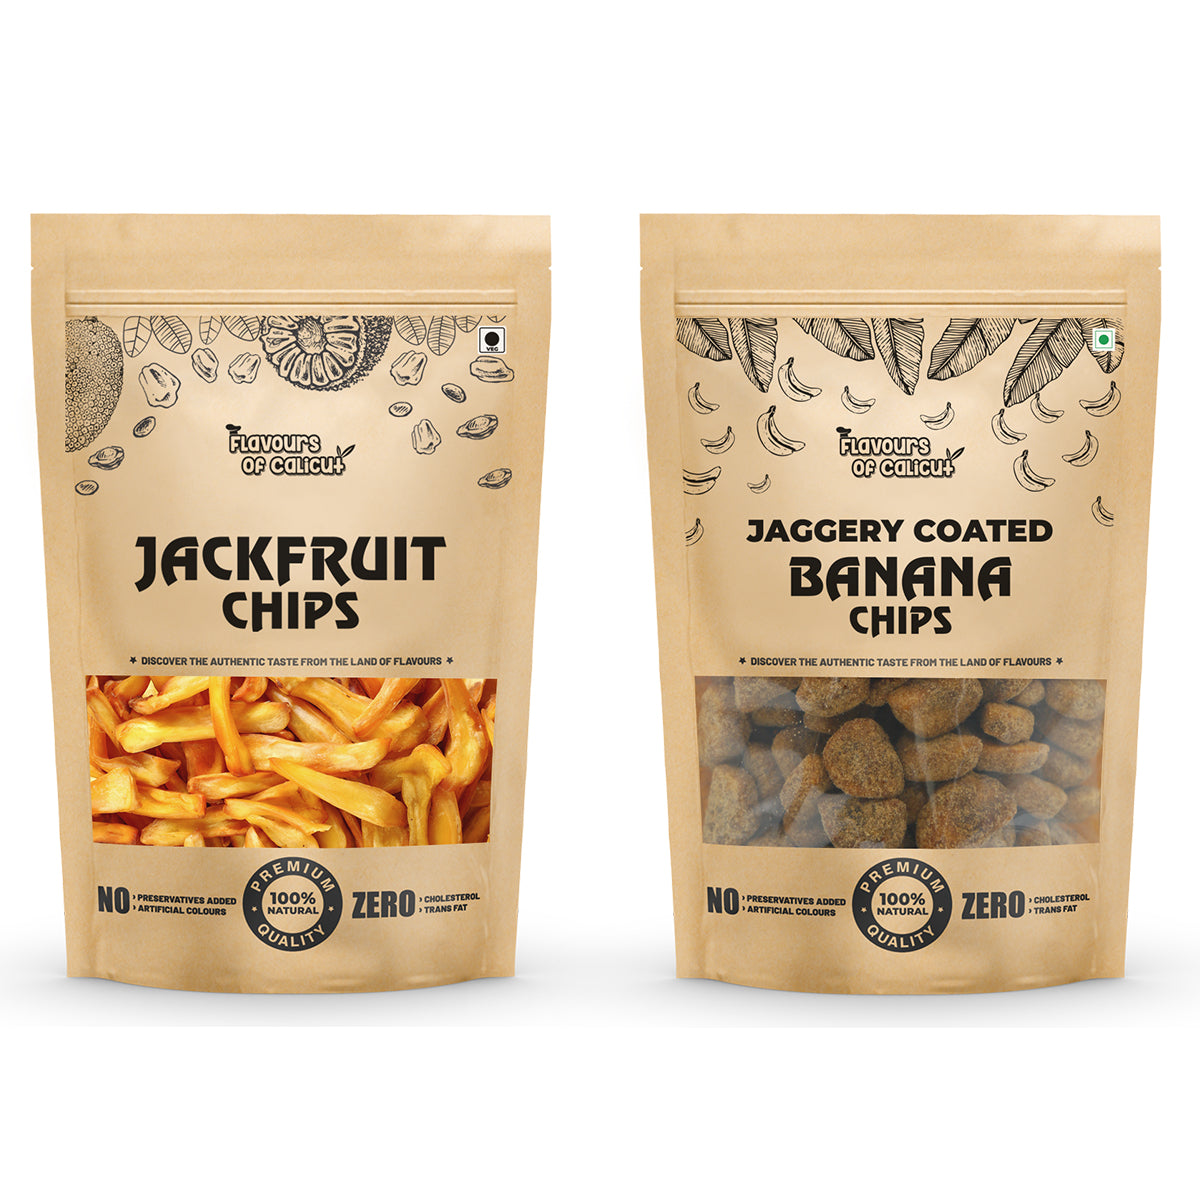 Kerala Chips Combo - Jackfruit Chips (500g) & Jaggery Coated Banana Chips (500g) - 1kg